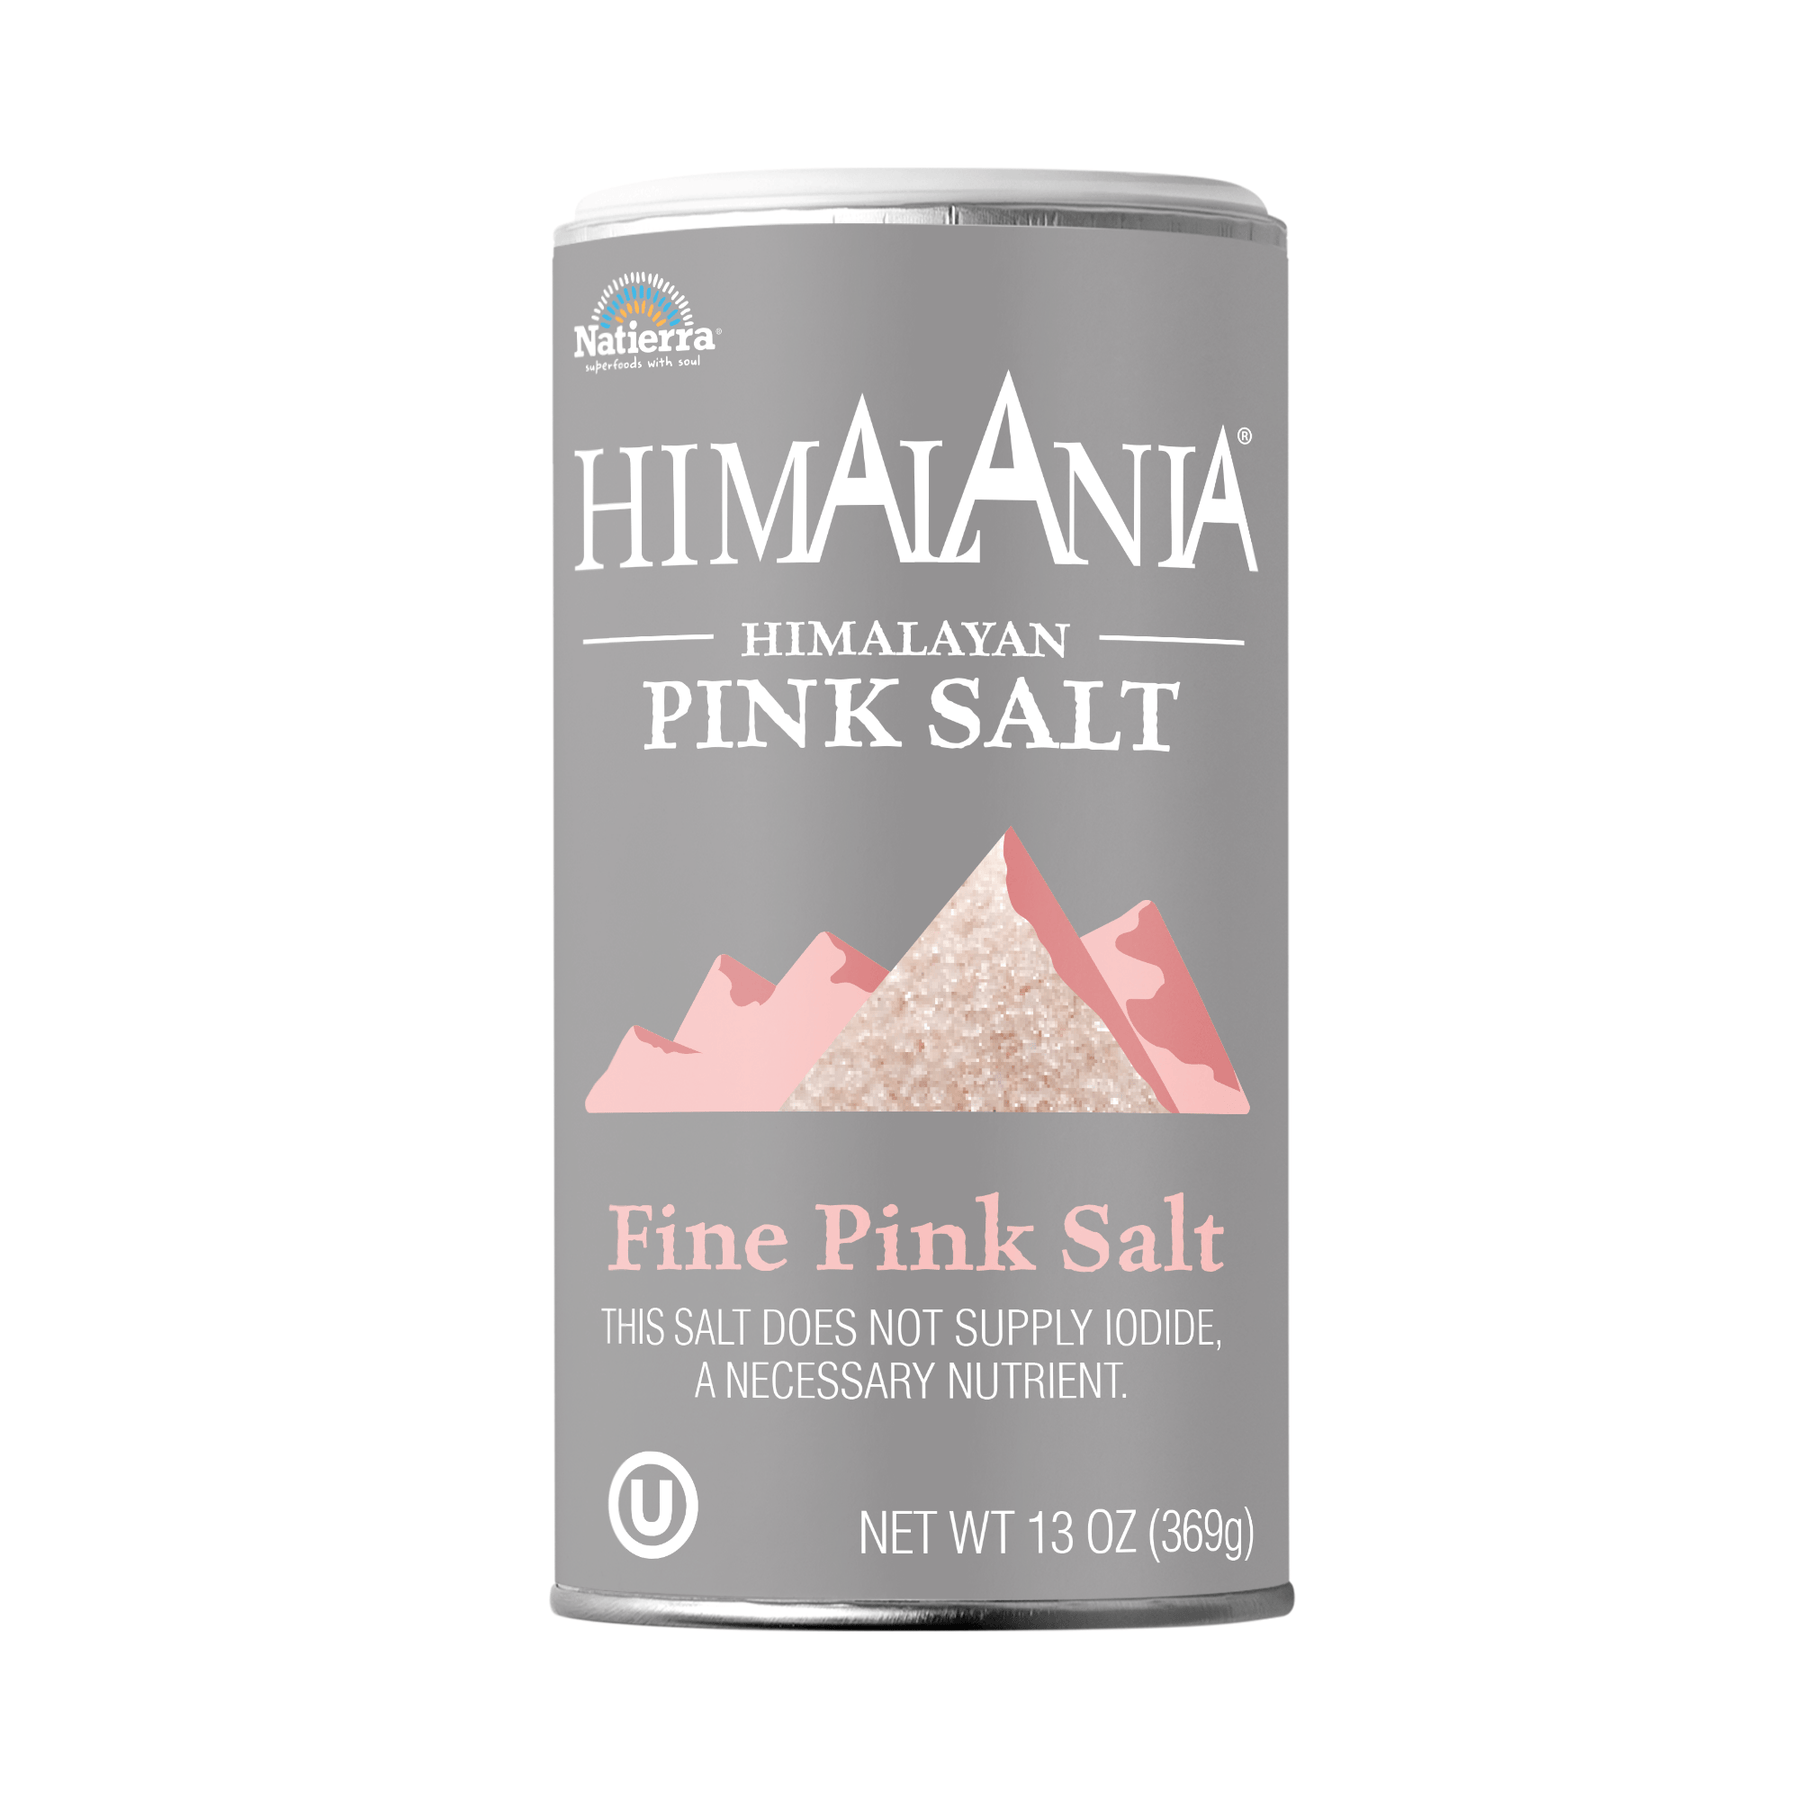 Natierra Himalania Fine Pink Salt 13 oz shaker